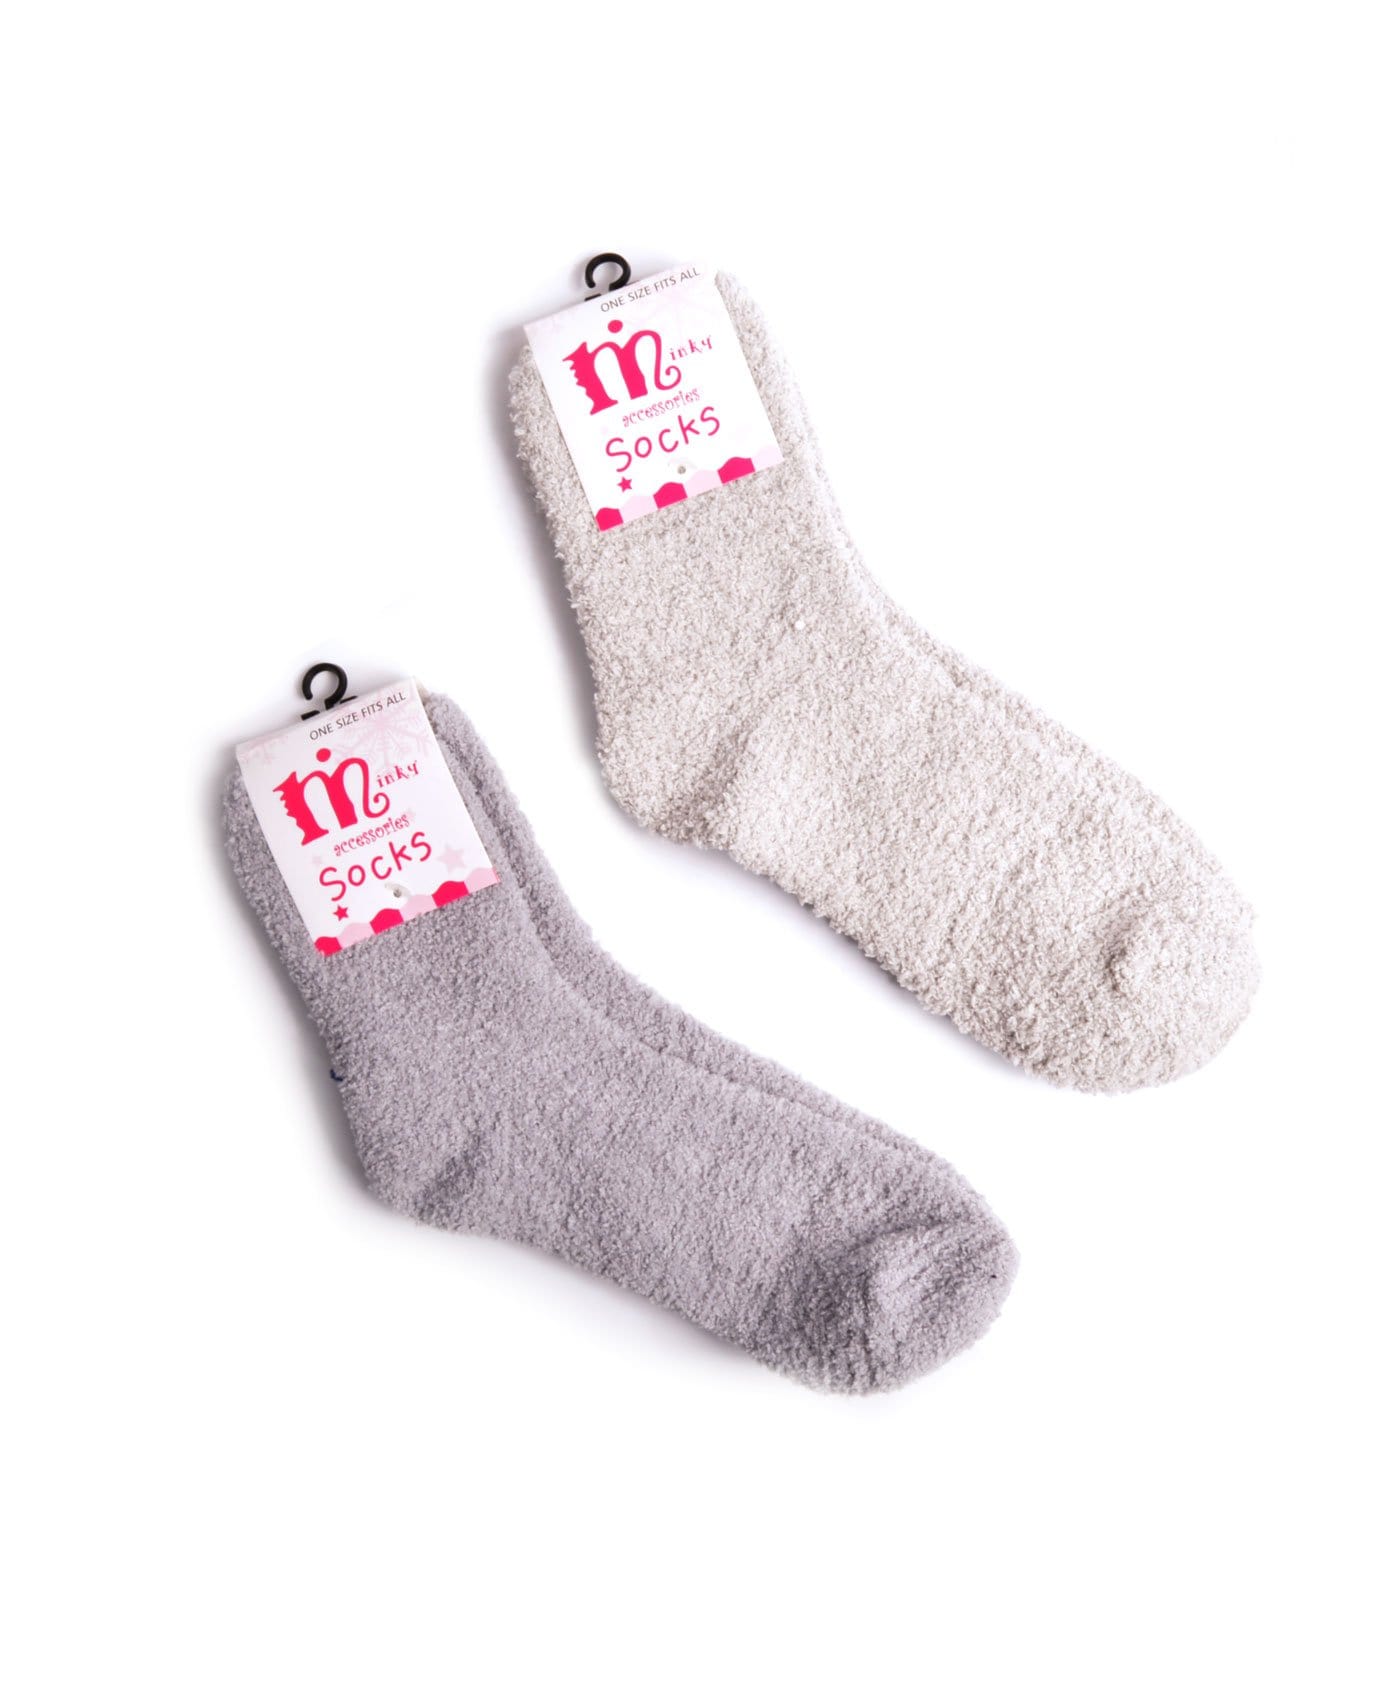 Minky Accessories Surprise Winter Socks